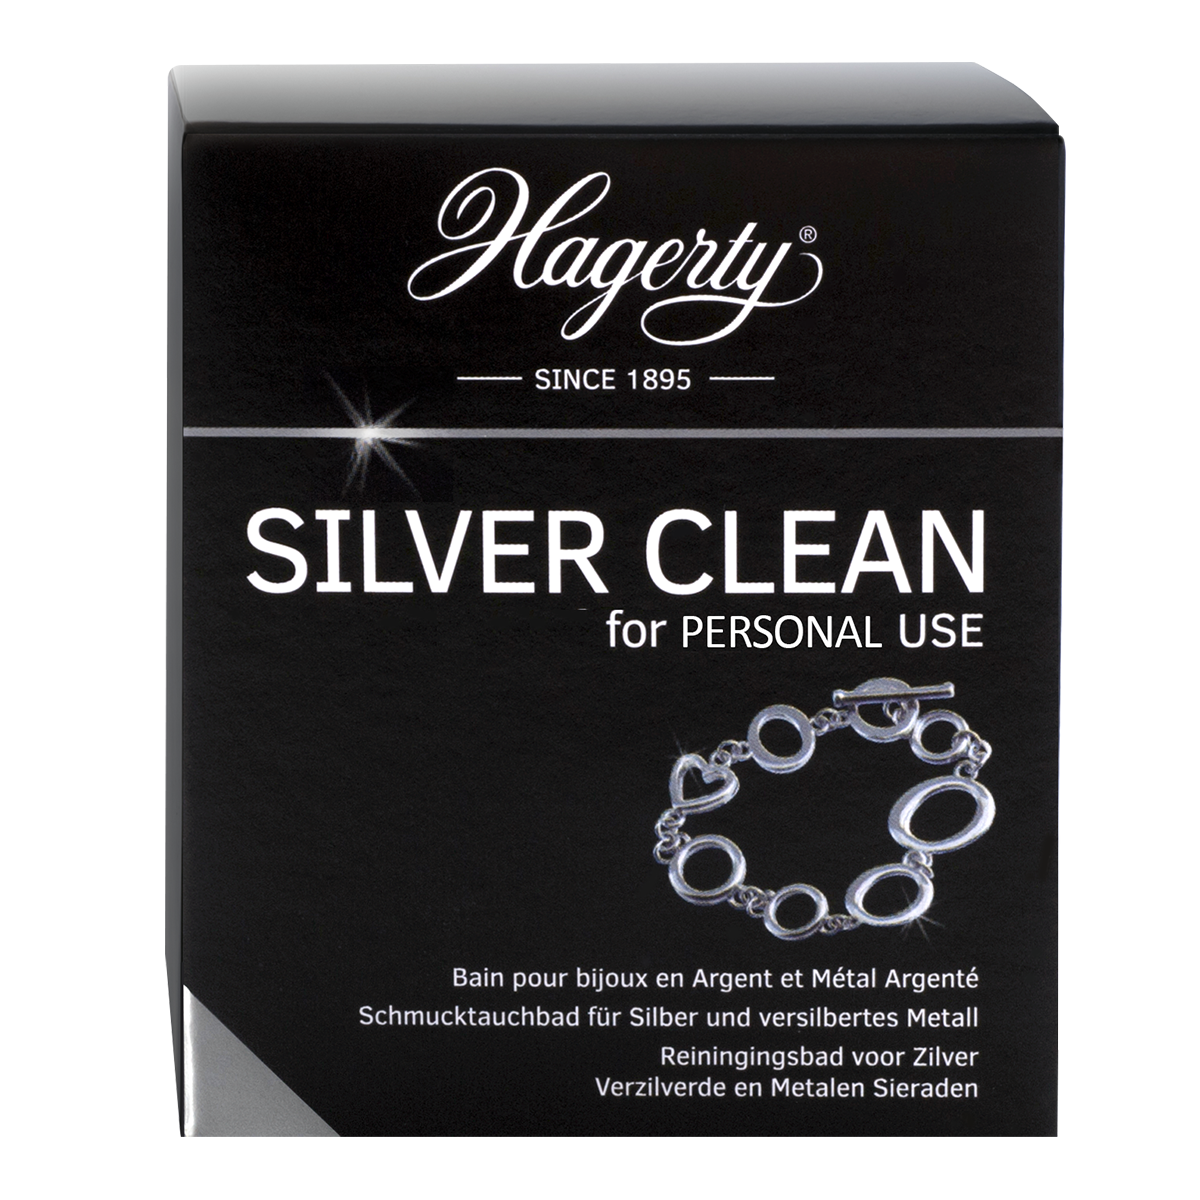 Hagerty Silber Bath - Silver Dip (2l) - 100403 - EAN 7610928017504 -   Online Shop - Hagerty Bodenpflege, Hagerty Haushaltspflege,  Hagerty Schmuckpflege, Hagerty Silberpflege